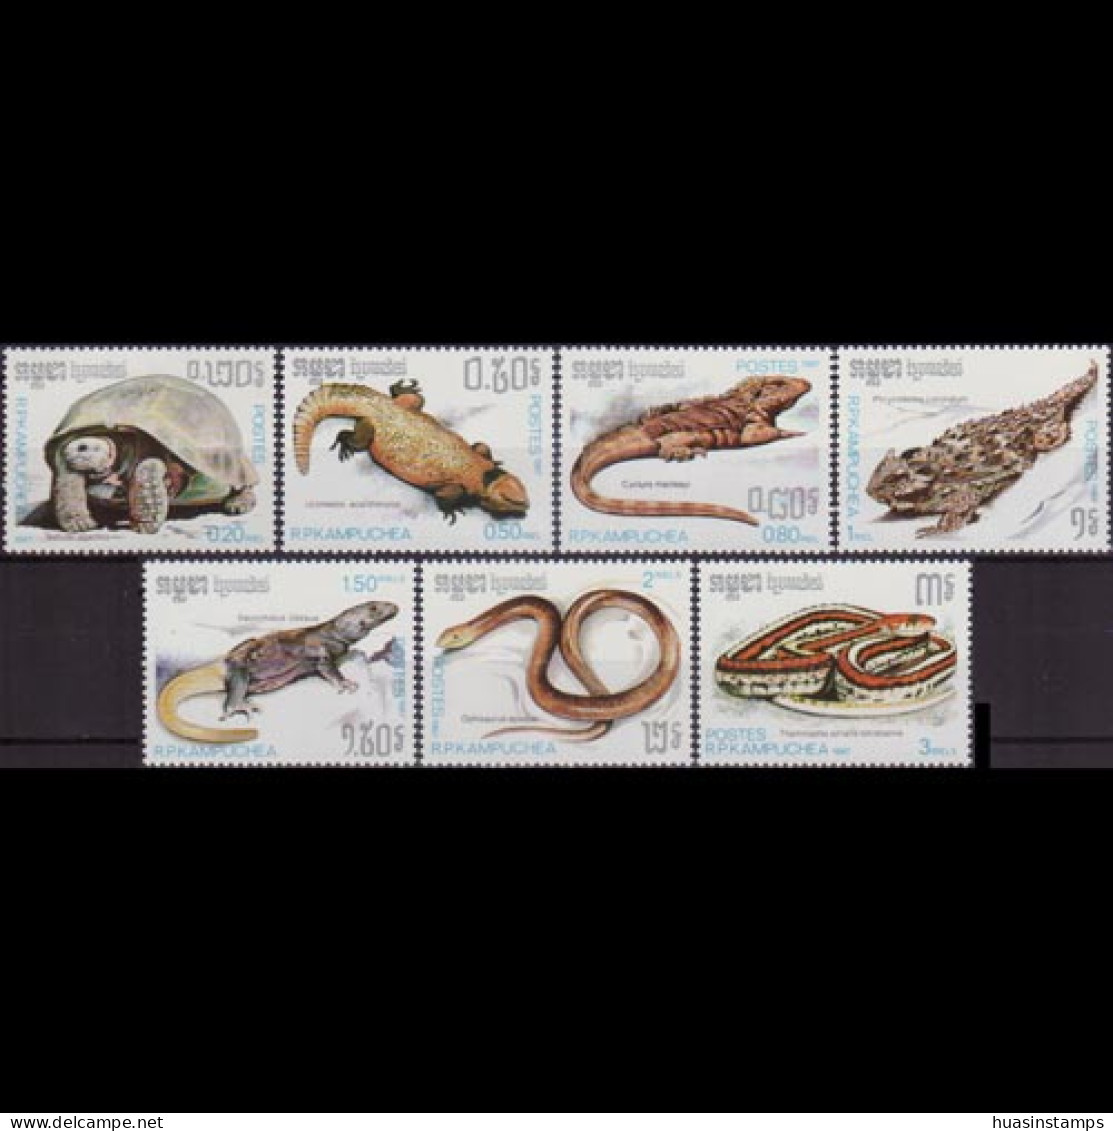 CAMBODIA 1987 - Scott# 805-11 Reptiles Set Of 7 MNH - Cambodia